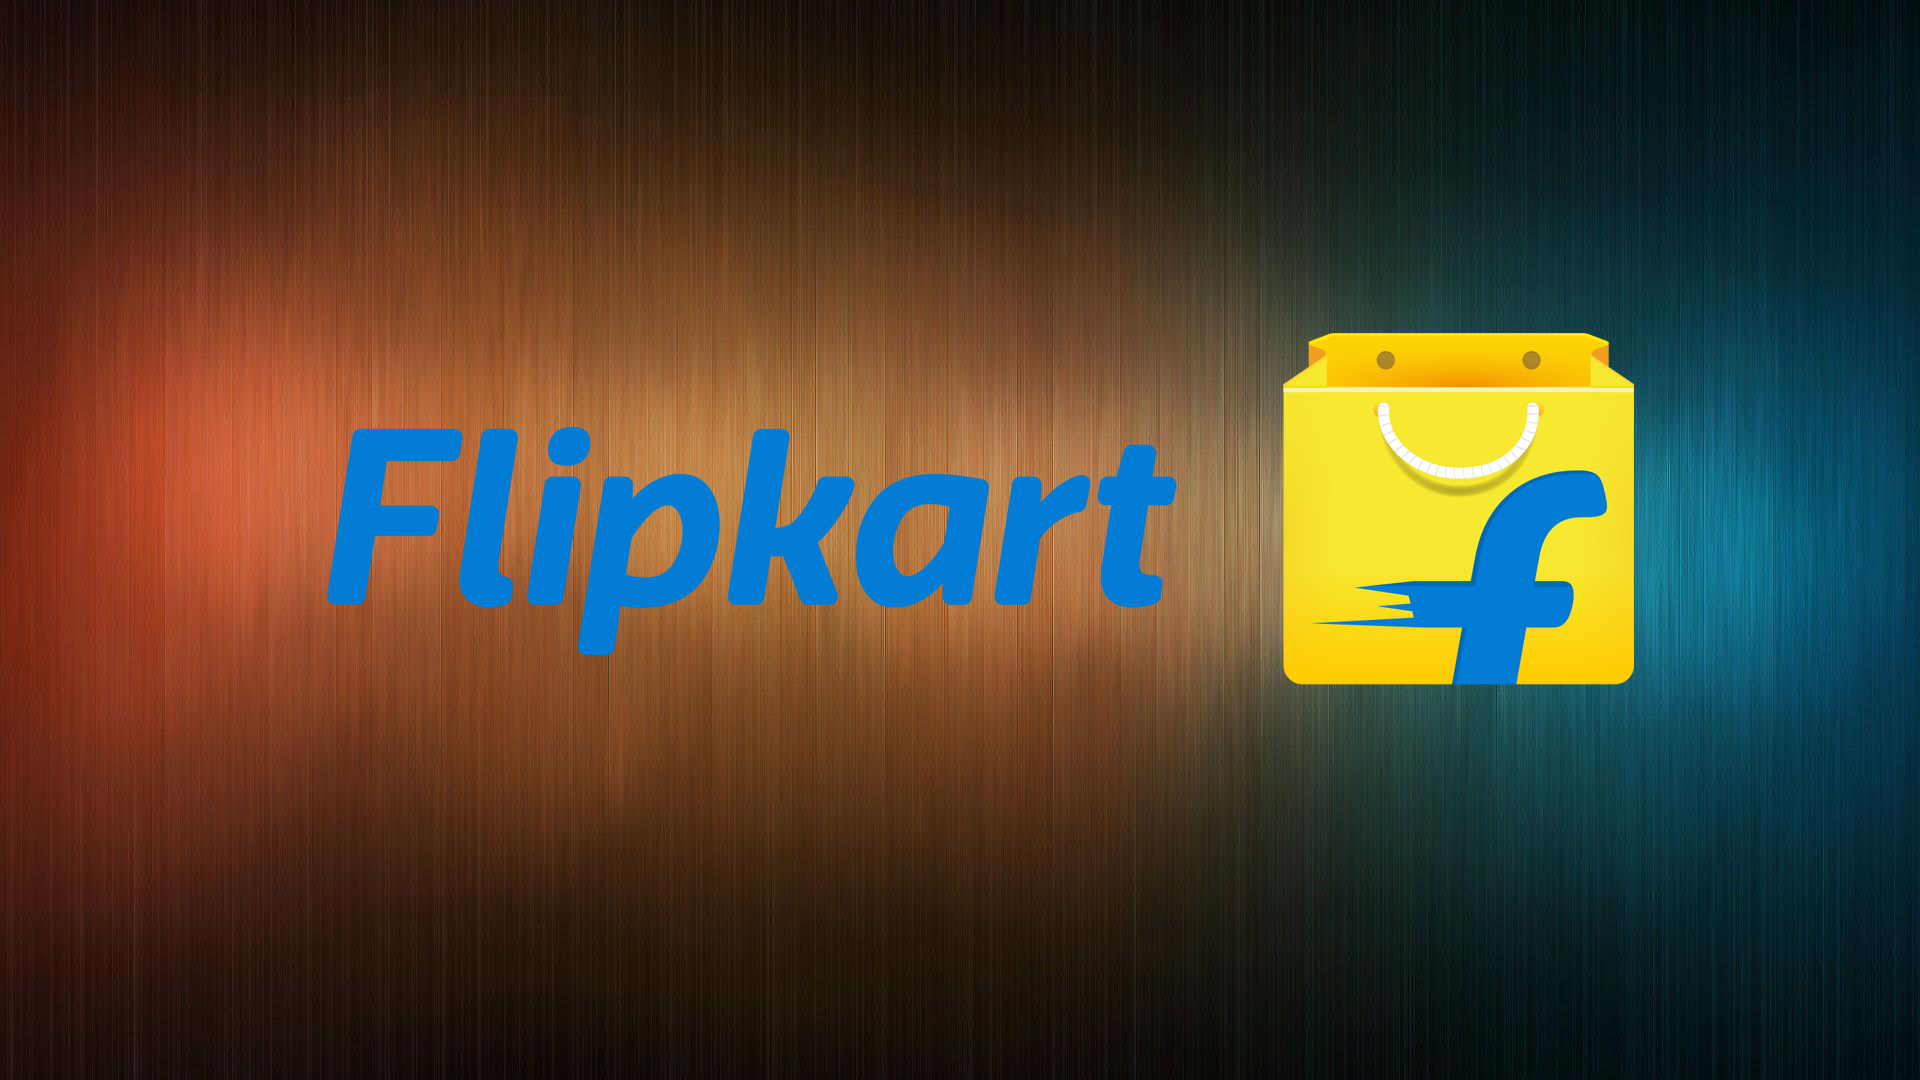 Flipkart Download for PC